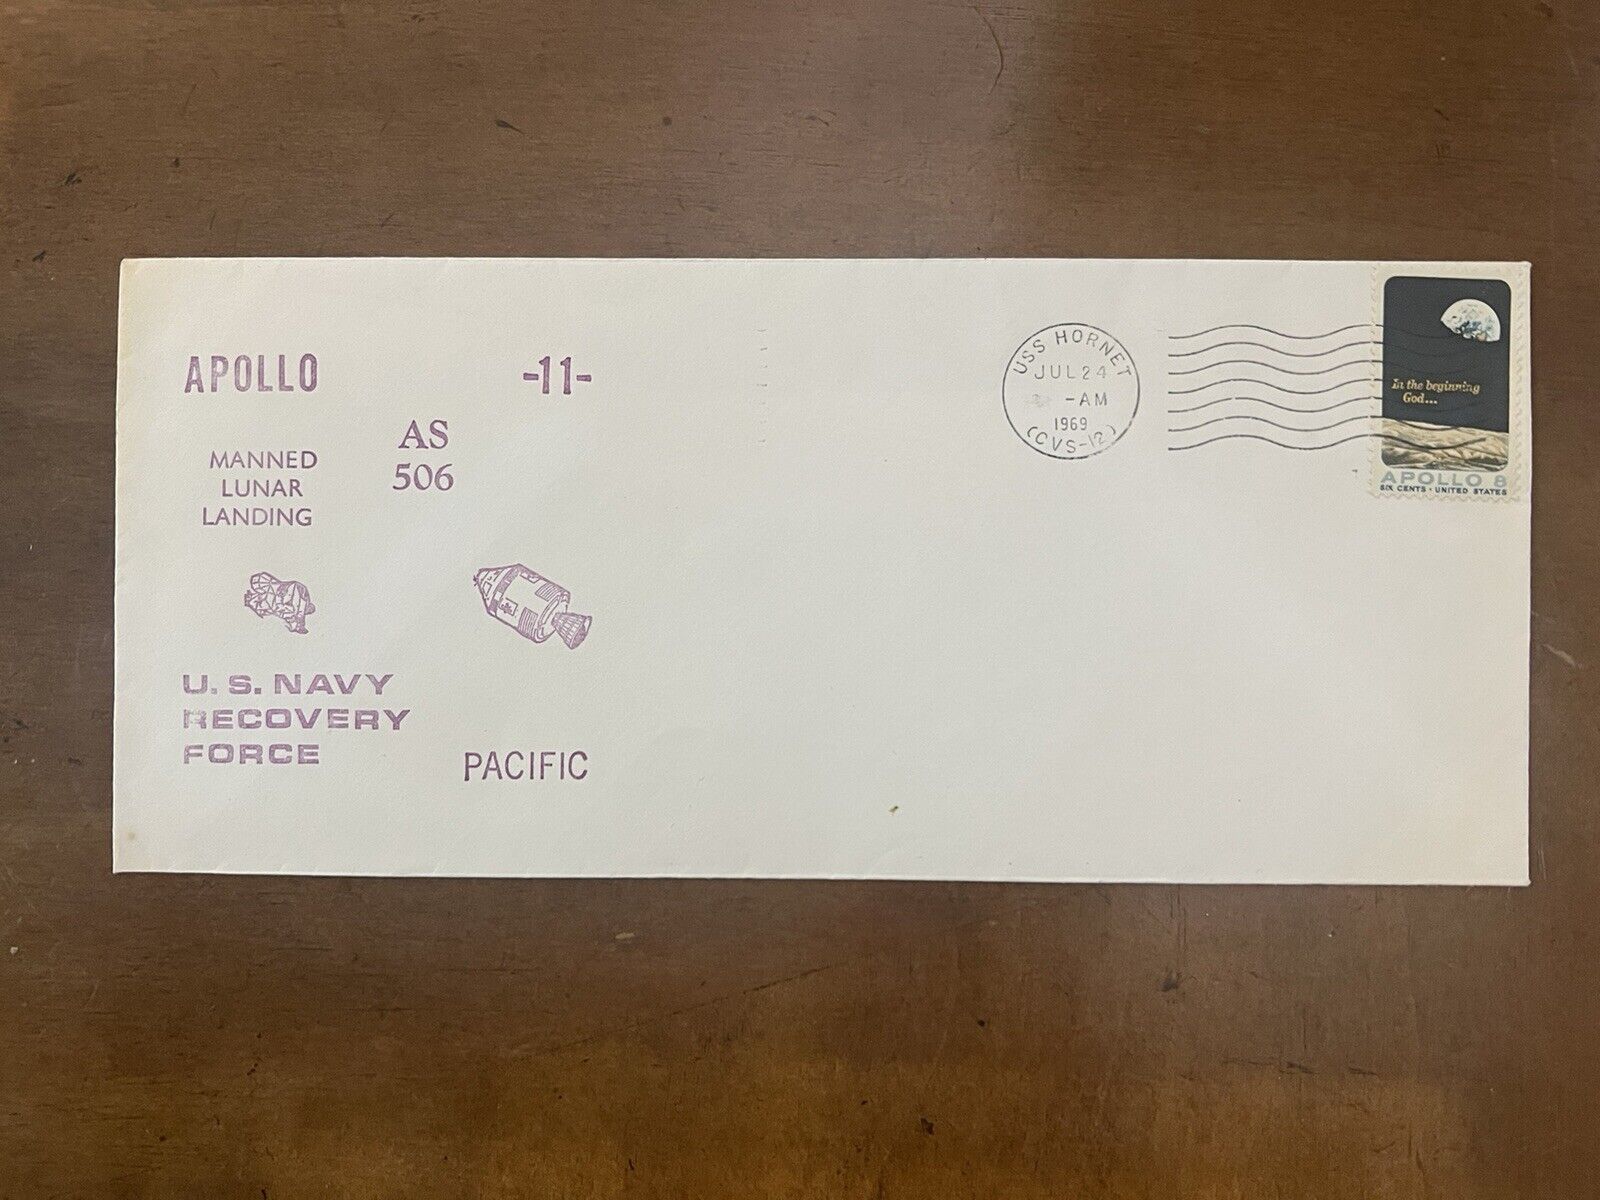 Vintage NASA USS Hornet Envelope - Post Marked July 24 1969 - Apollo 11